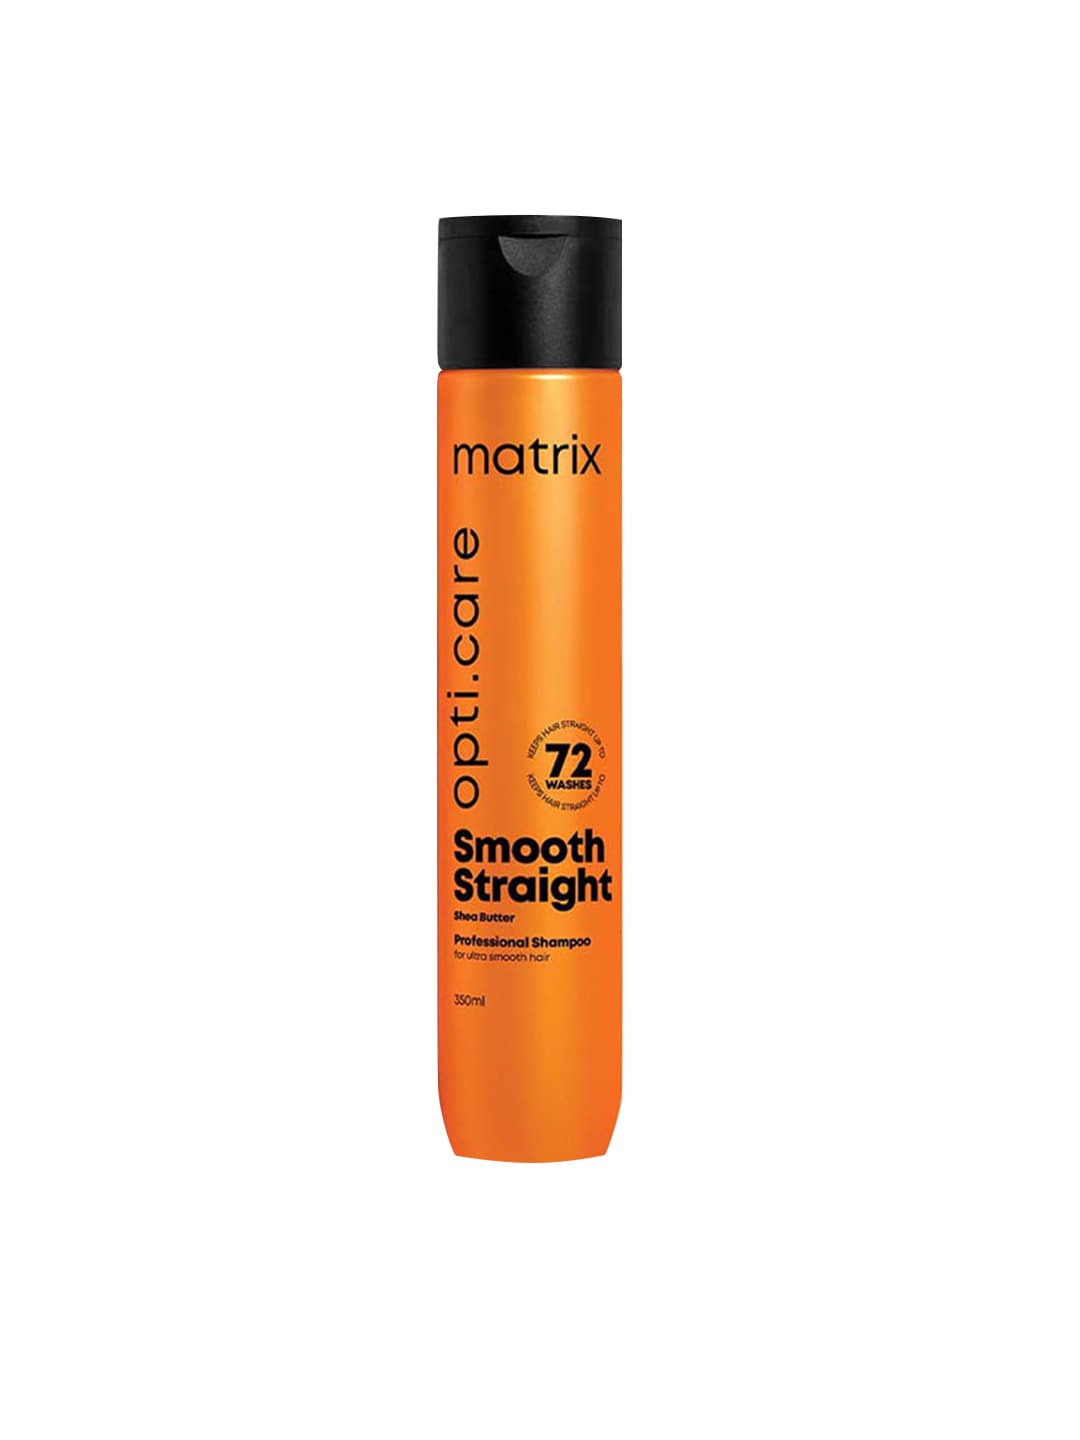 Matrix Opti Care Professional Ultra Smoothing Shampoo - 350ml Price in India